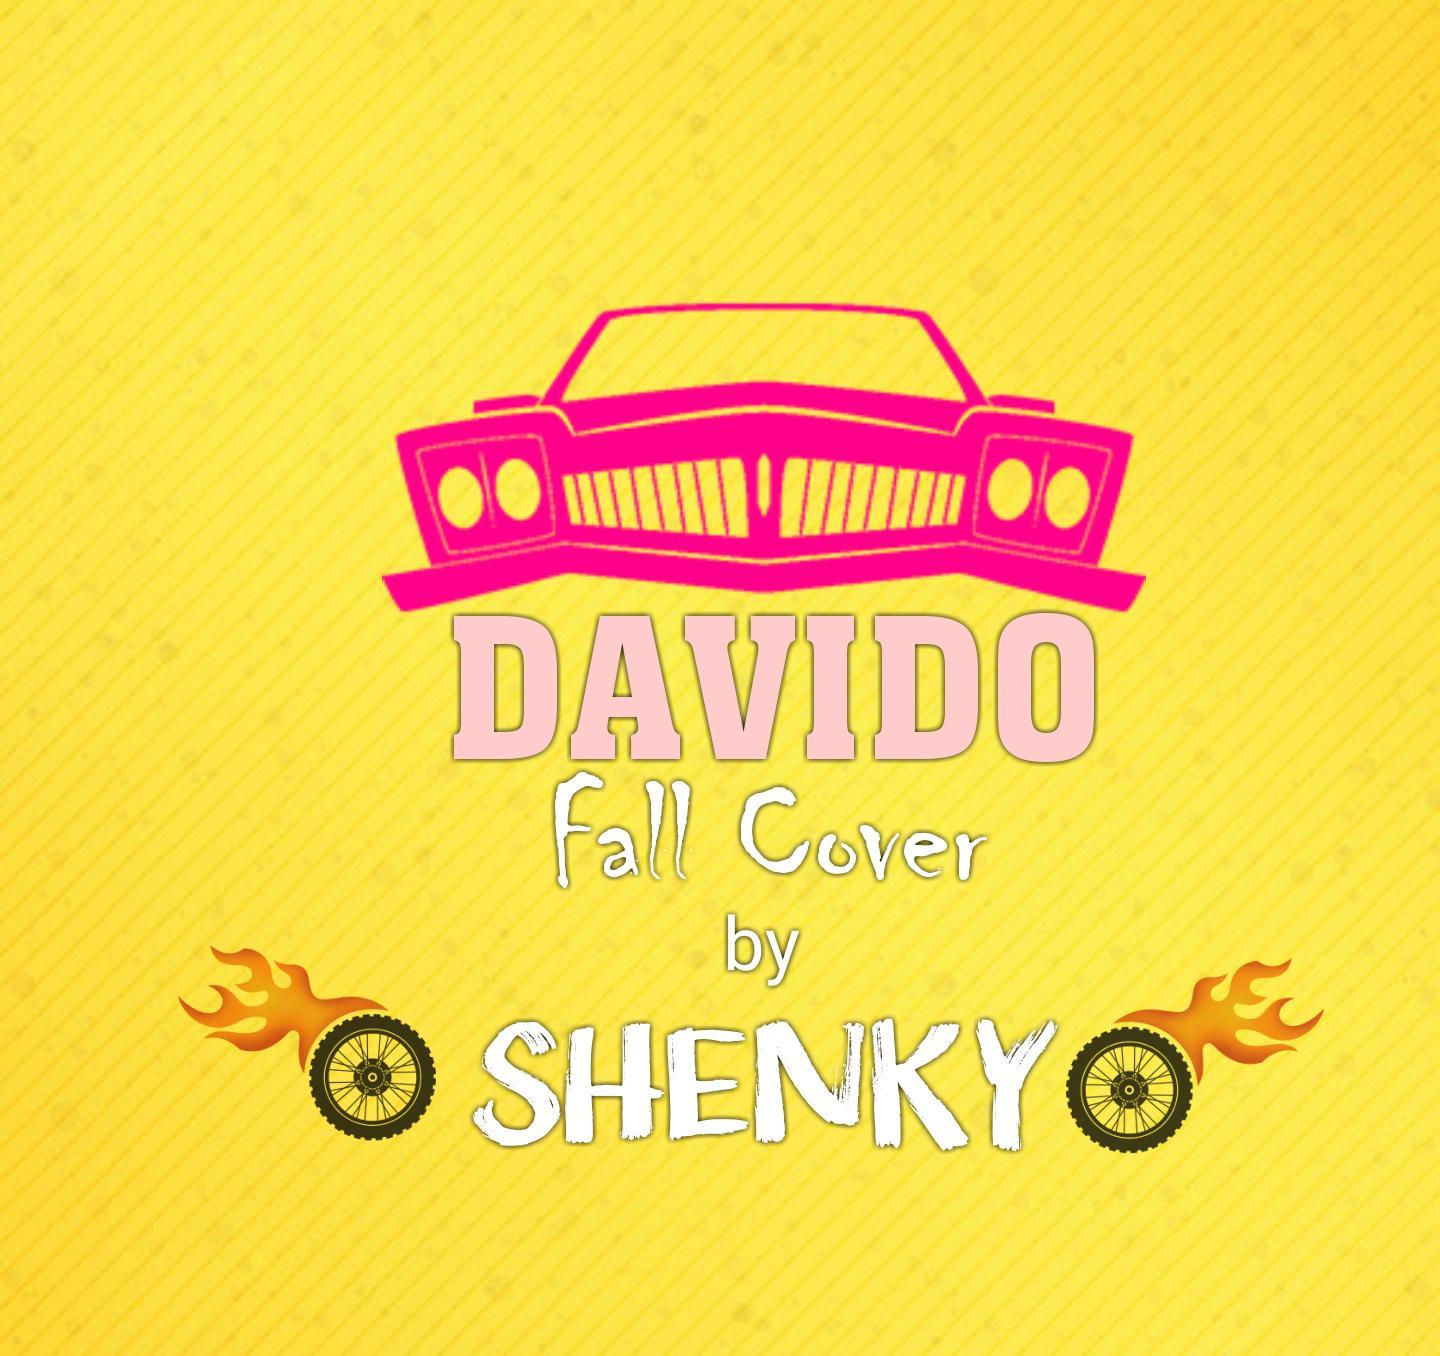 Shenky Shugah - "Fall" (Davido Cover)